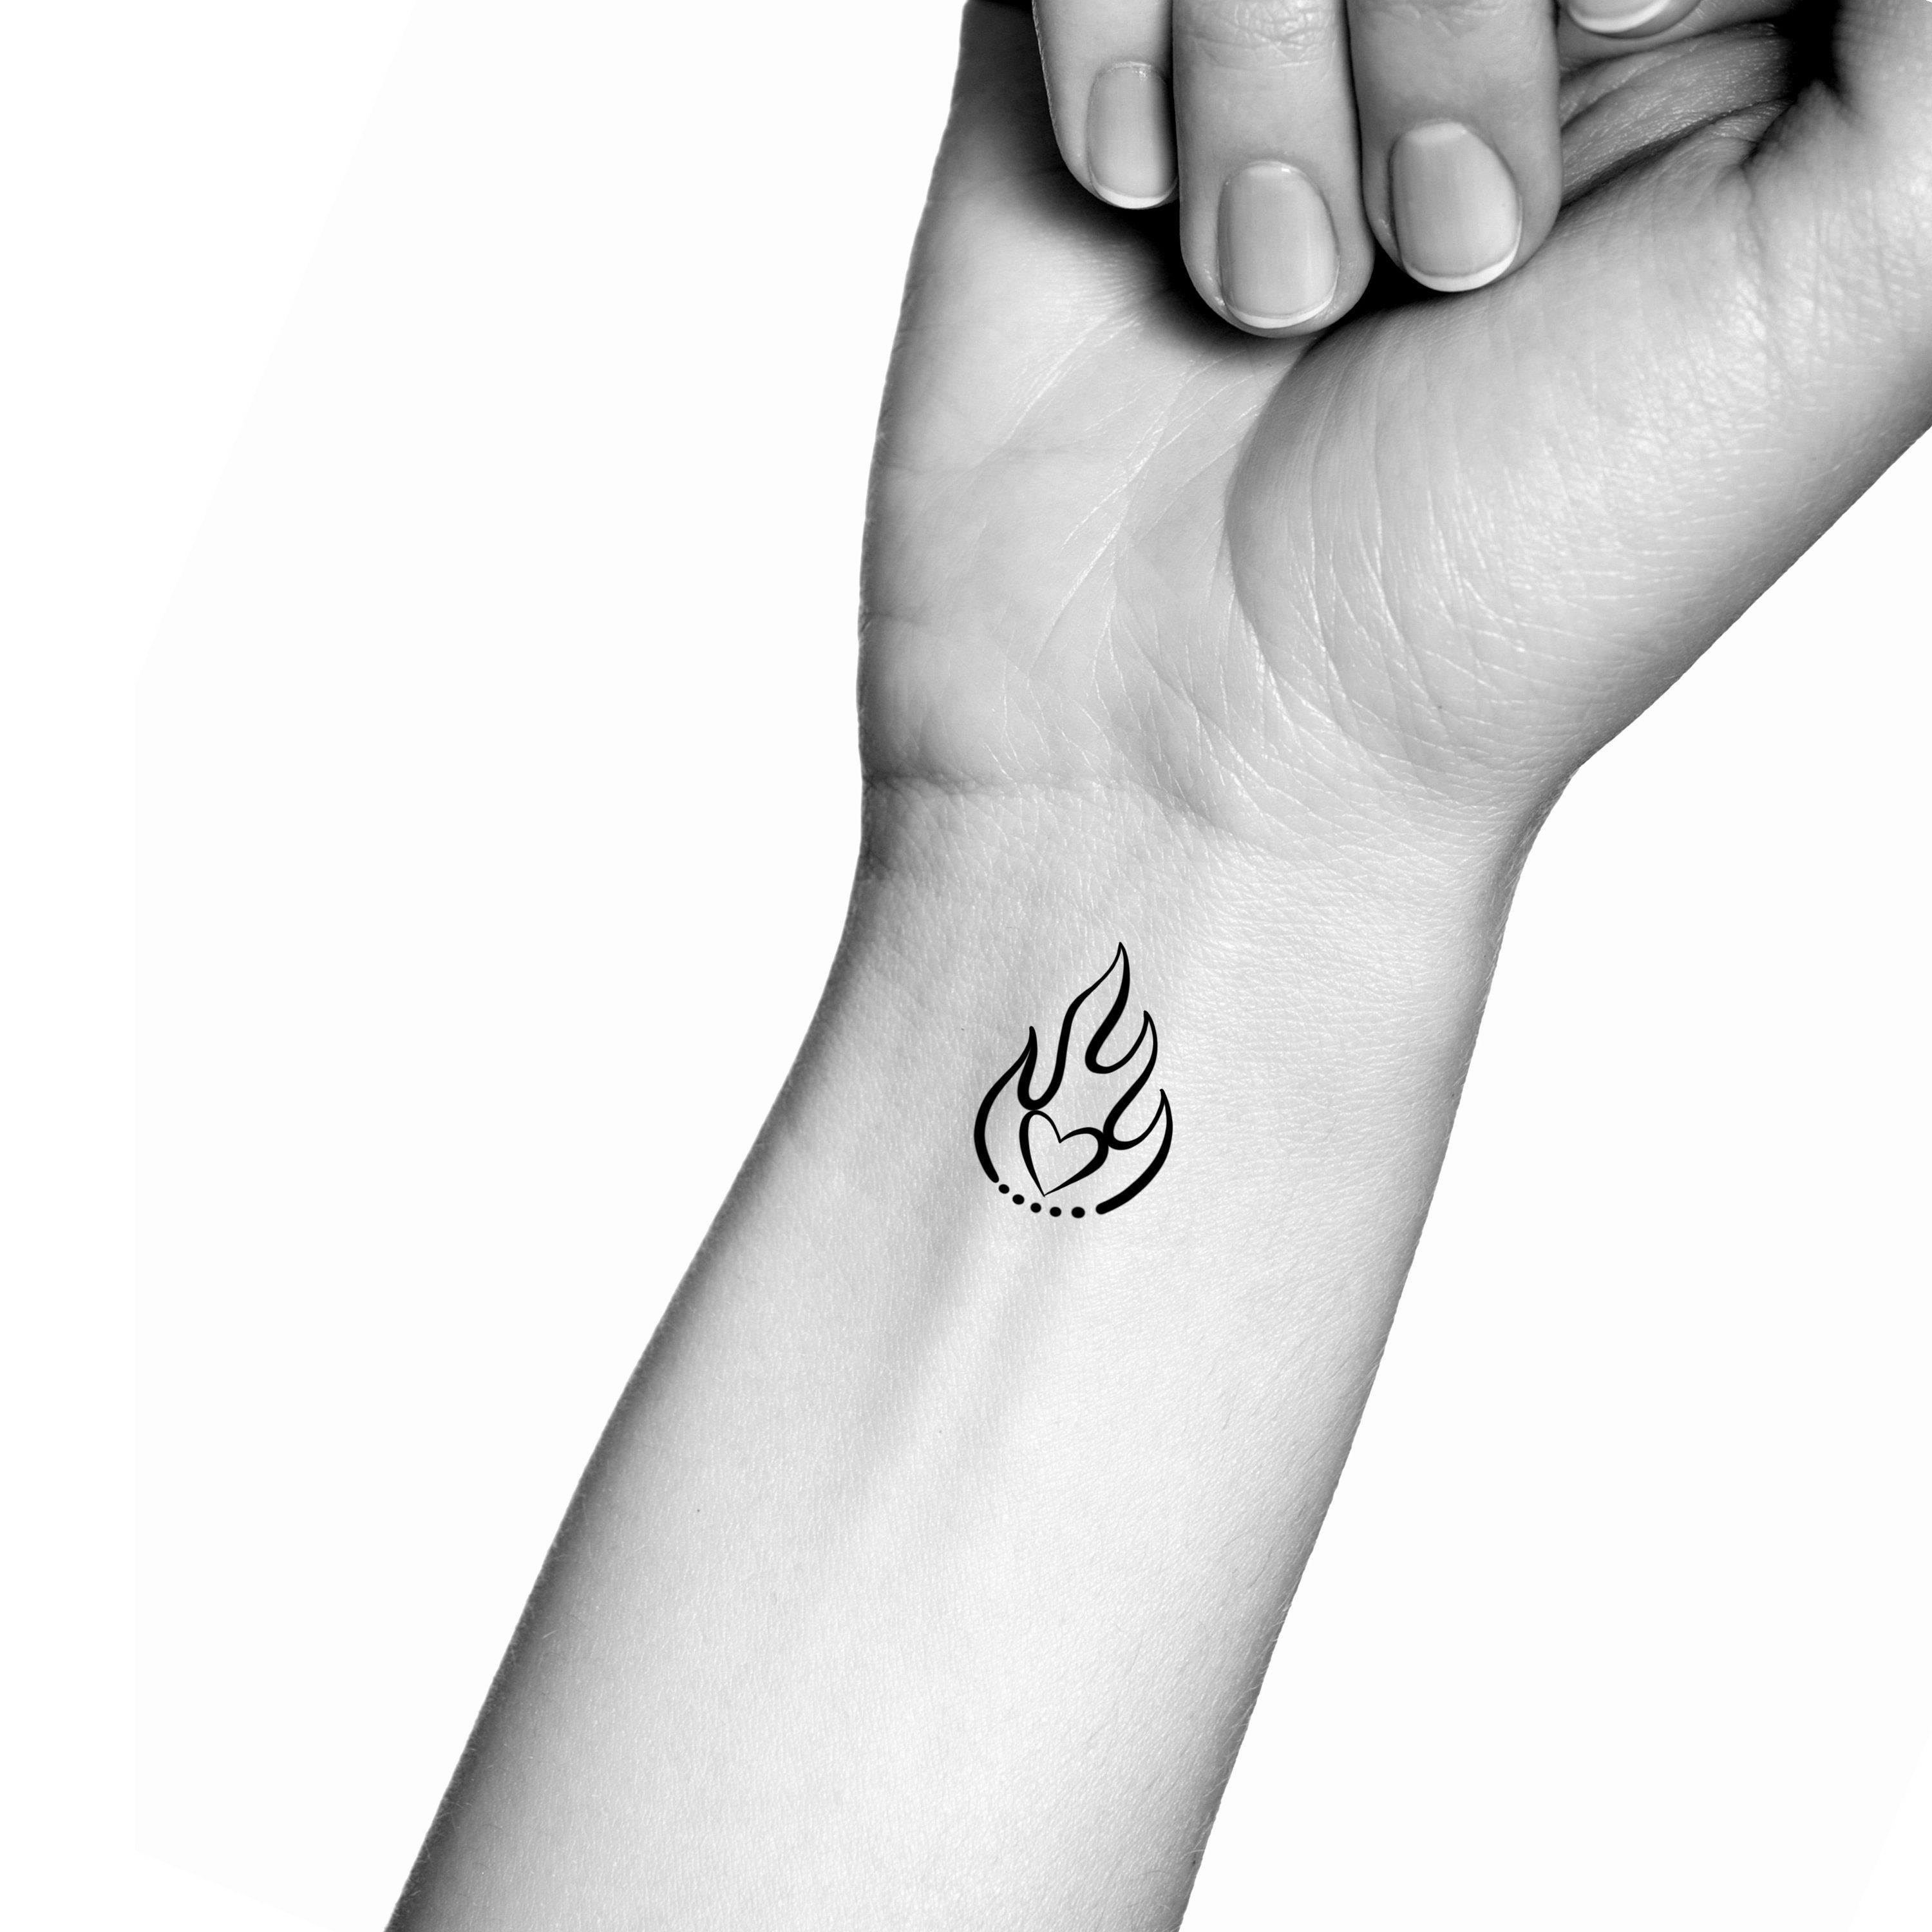 Small flame tattoo on wrist | Fire tattoo, Flame tattoos, Forearm tattoos